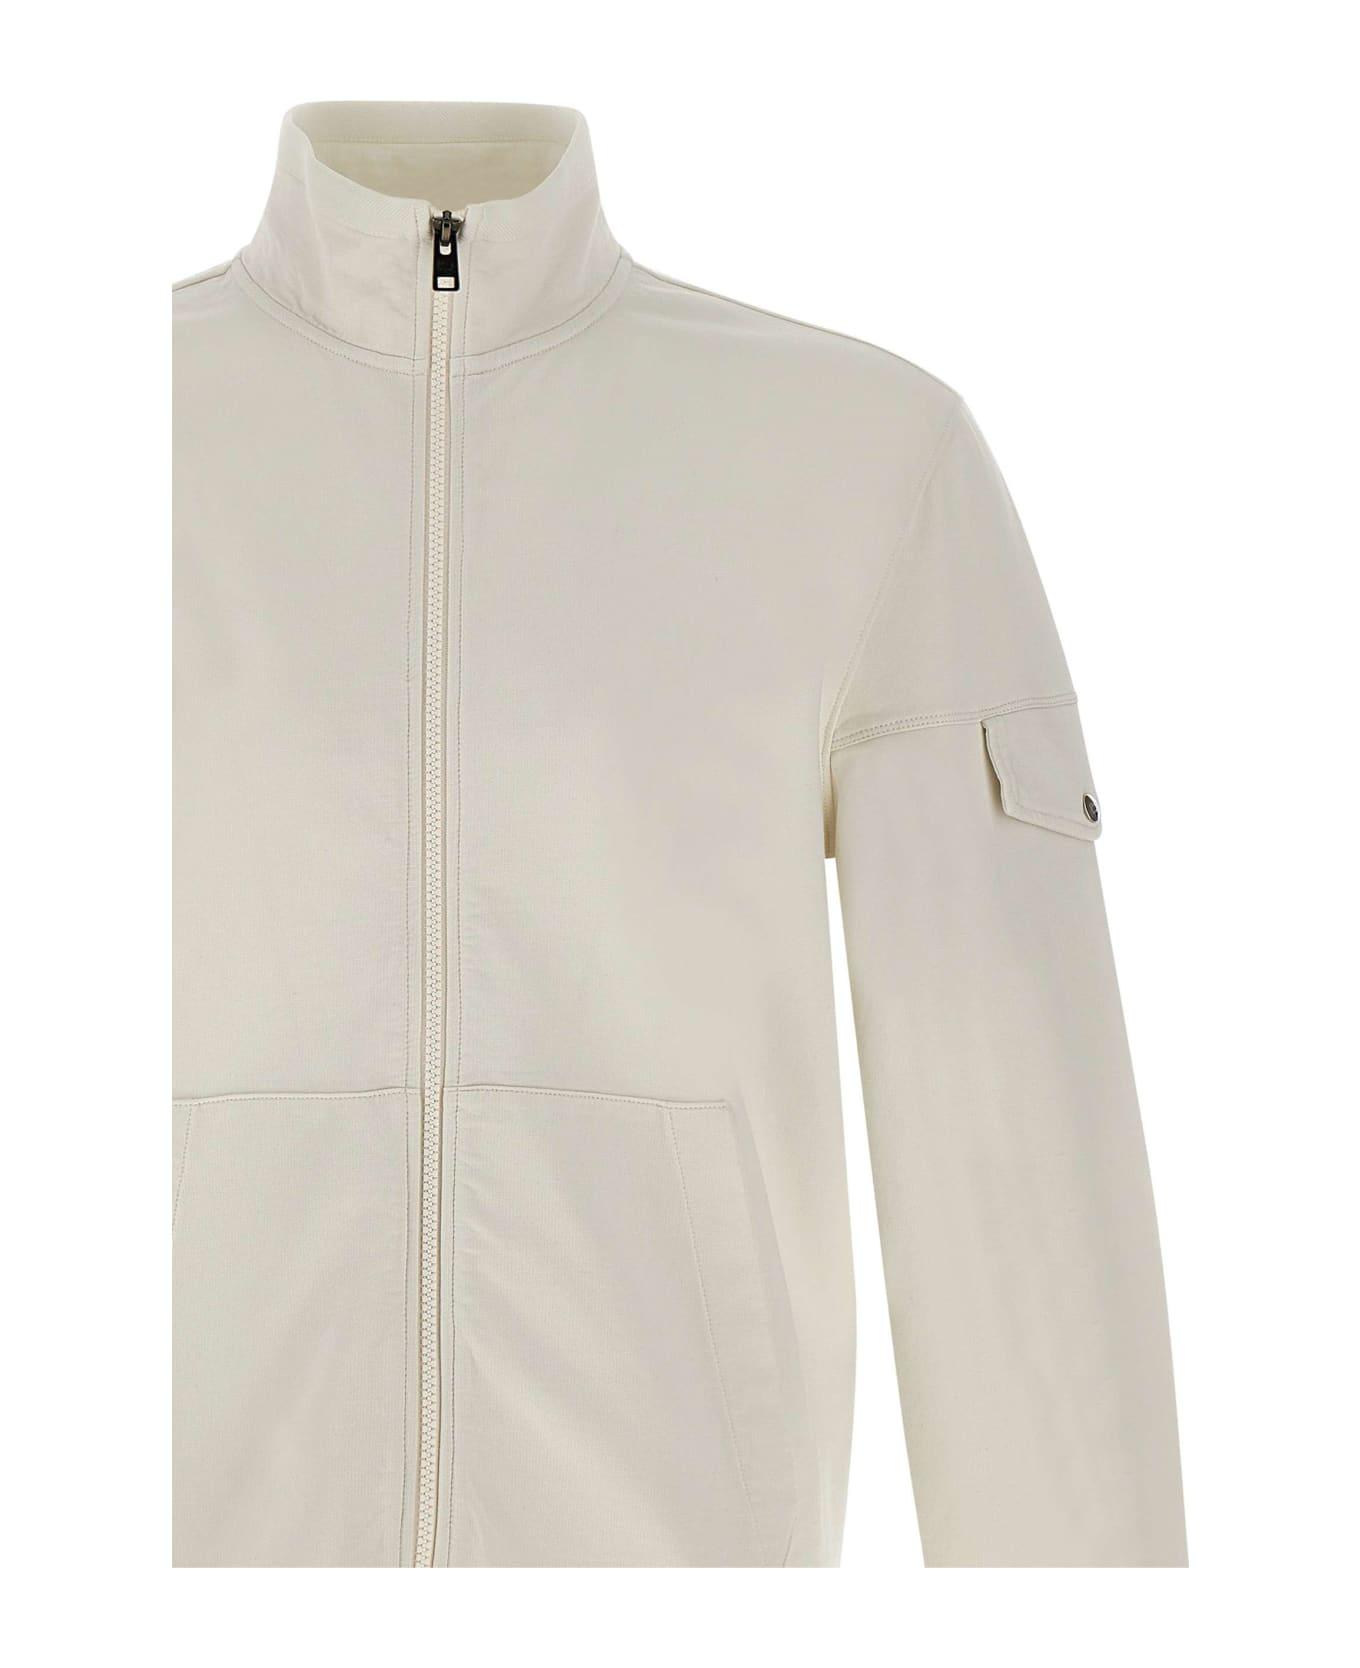 Woolrich 'extra Light' Cotton Sweatshirt - WHITE フリース